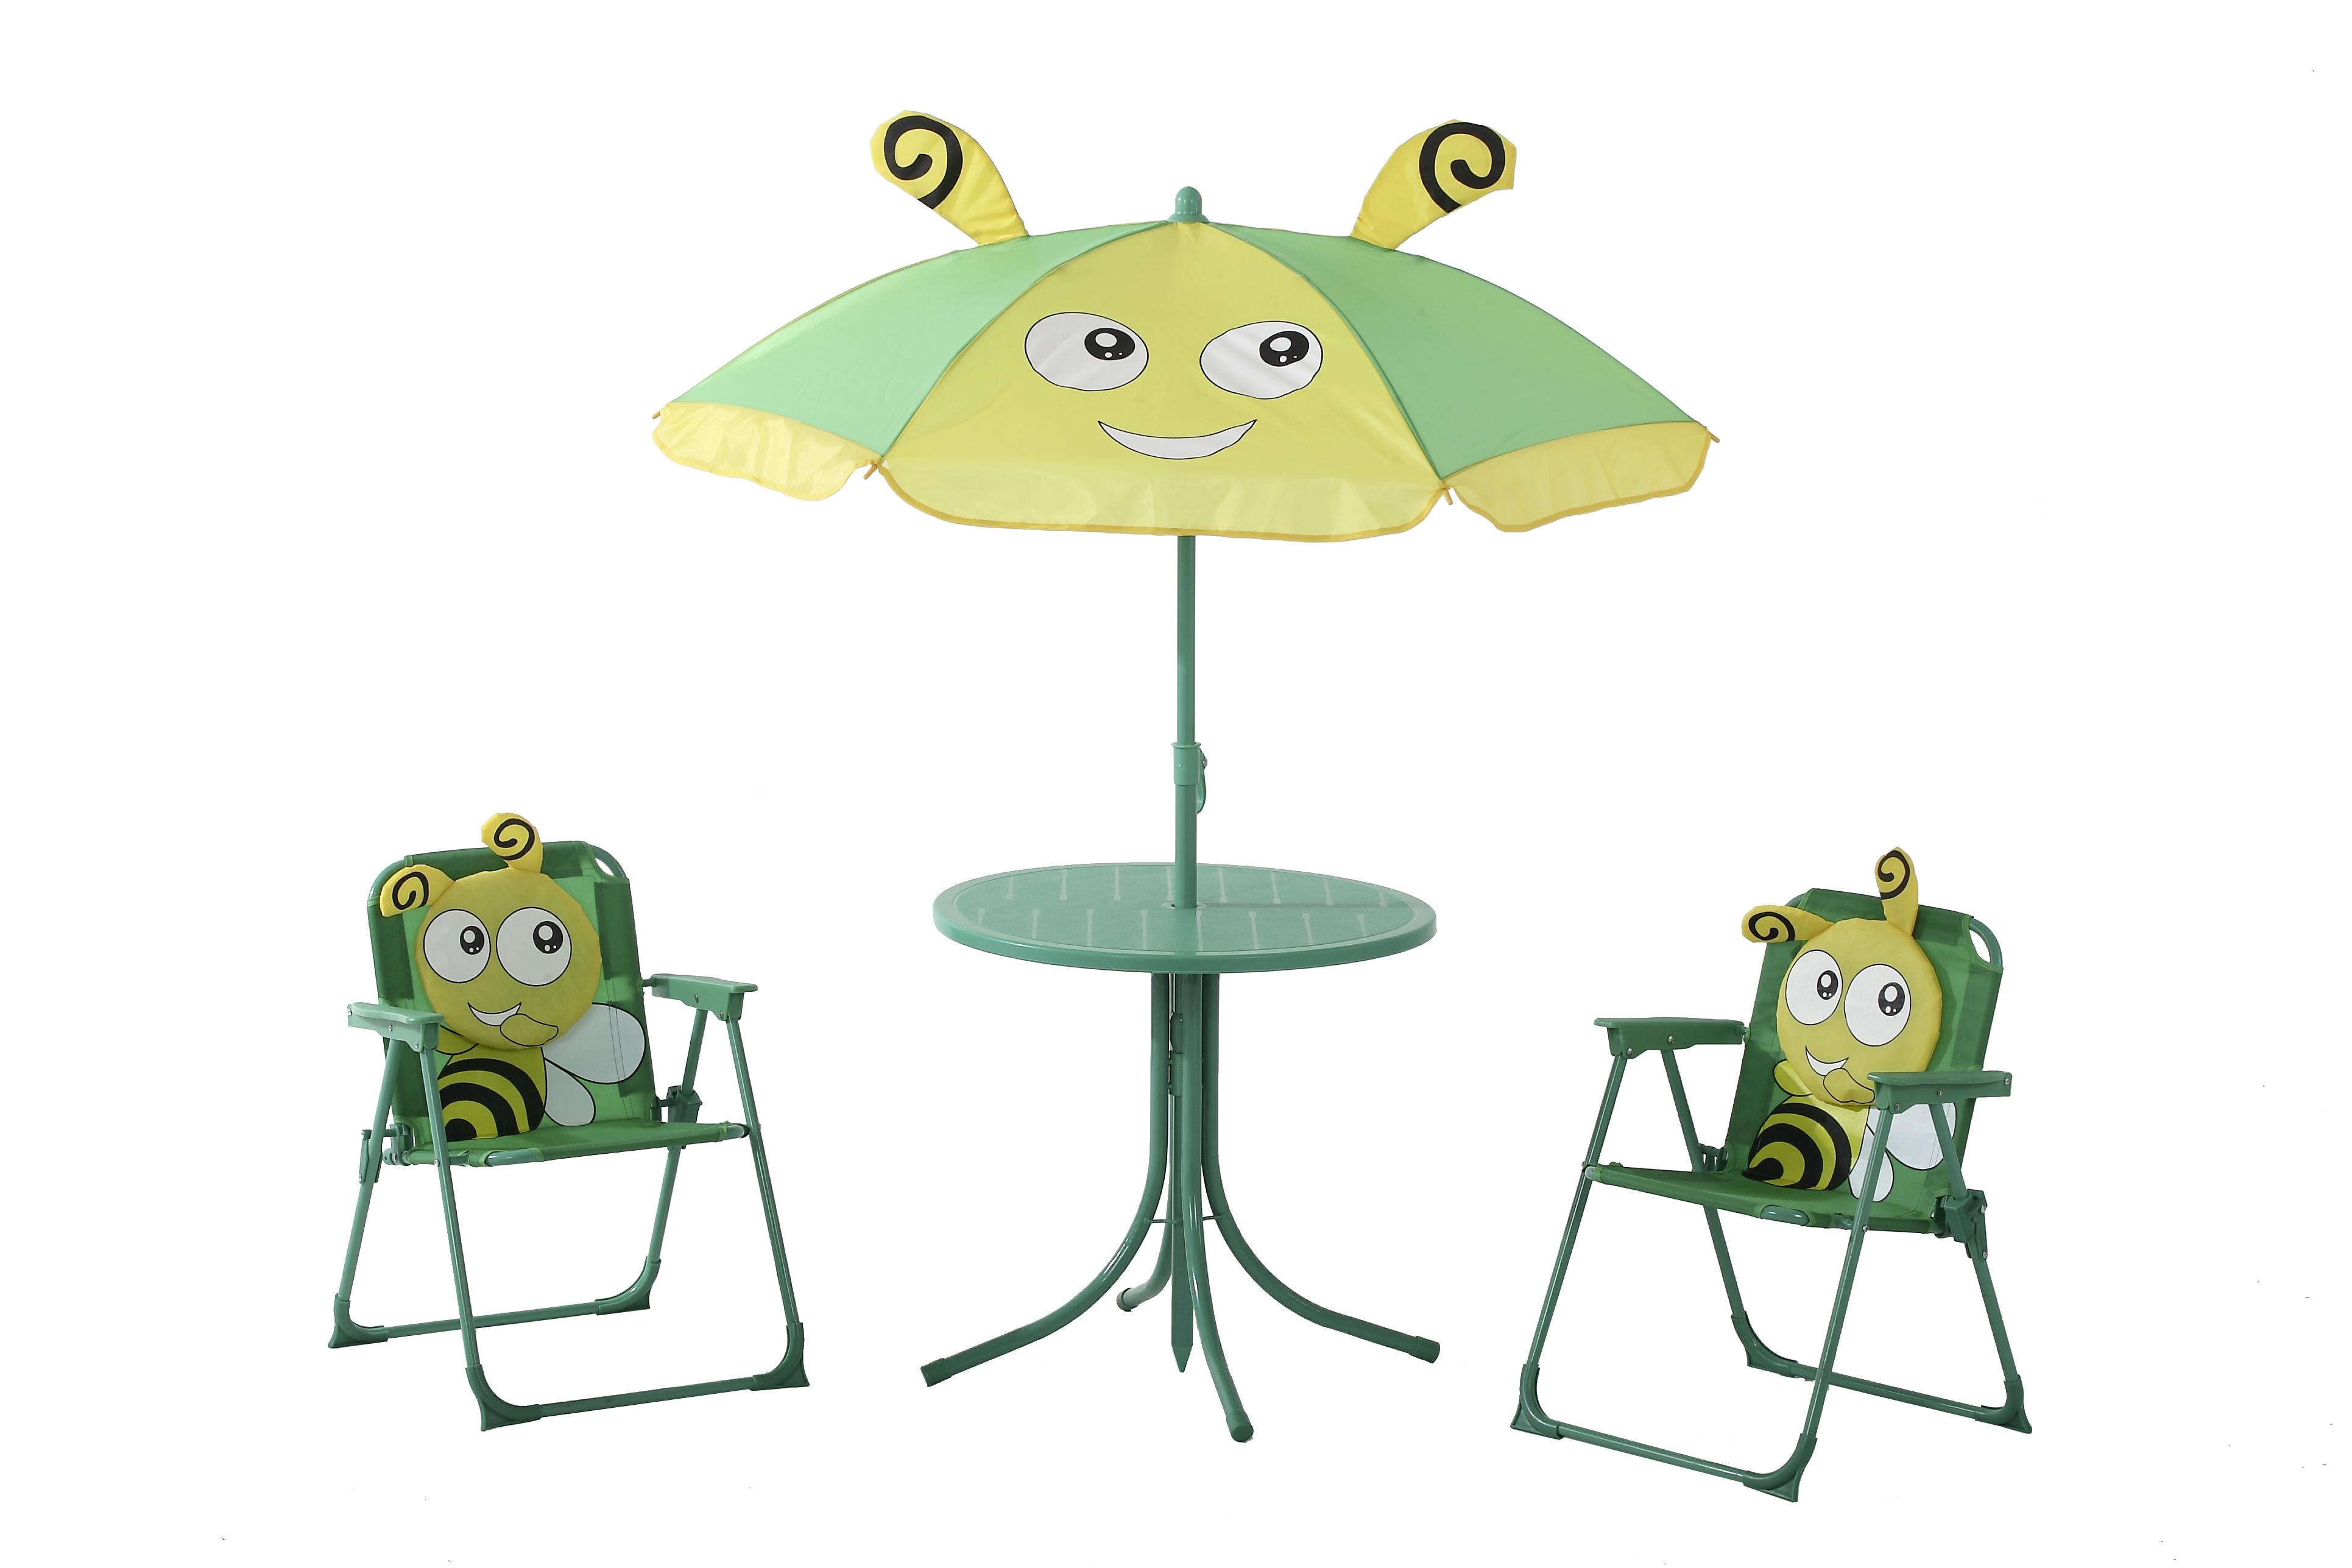 Kindersitzgruppe Bee Grün Stahl Mit Sonnenschirm - Grün, Basics, Metall